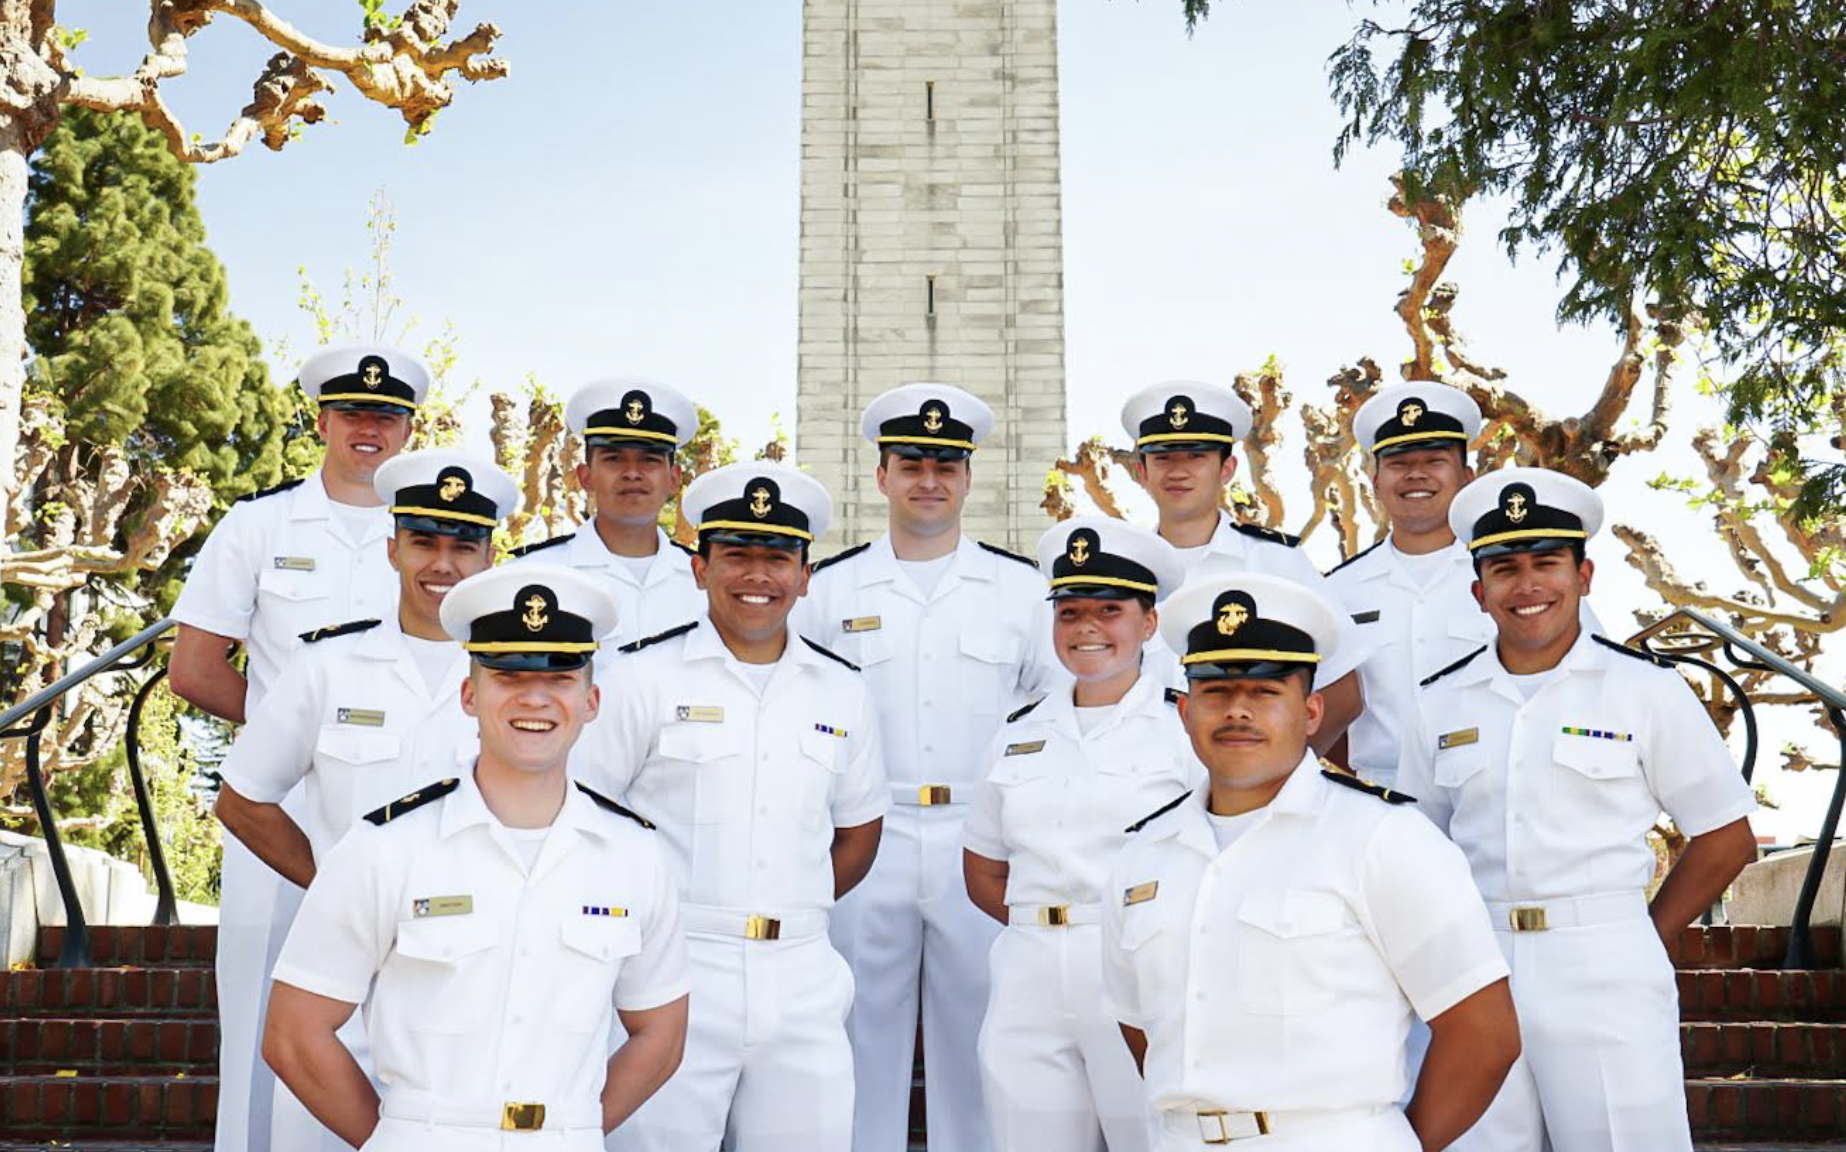 Large group of midshipmen dressed in white uniform